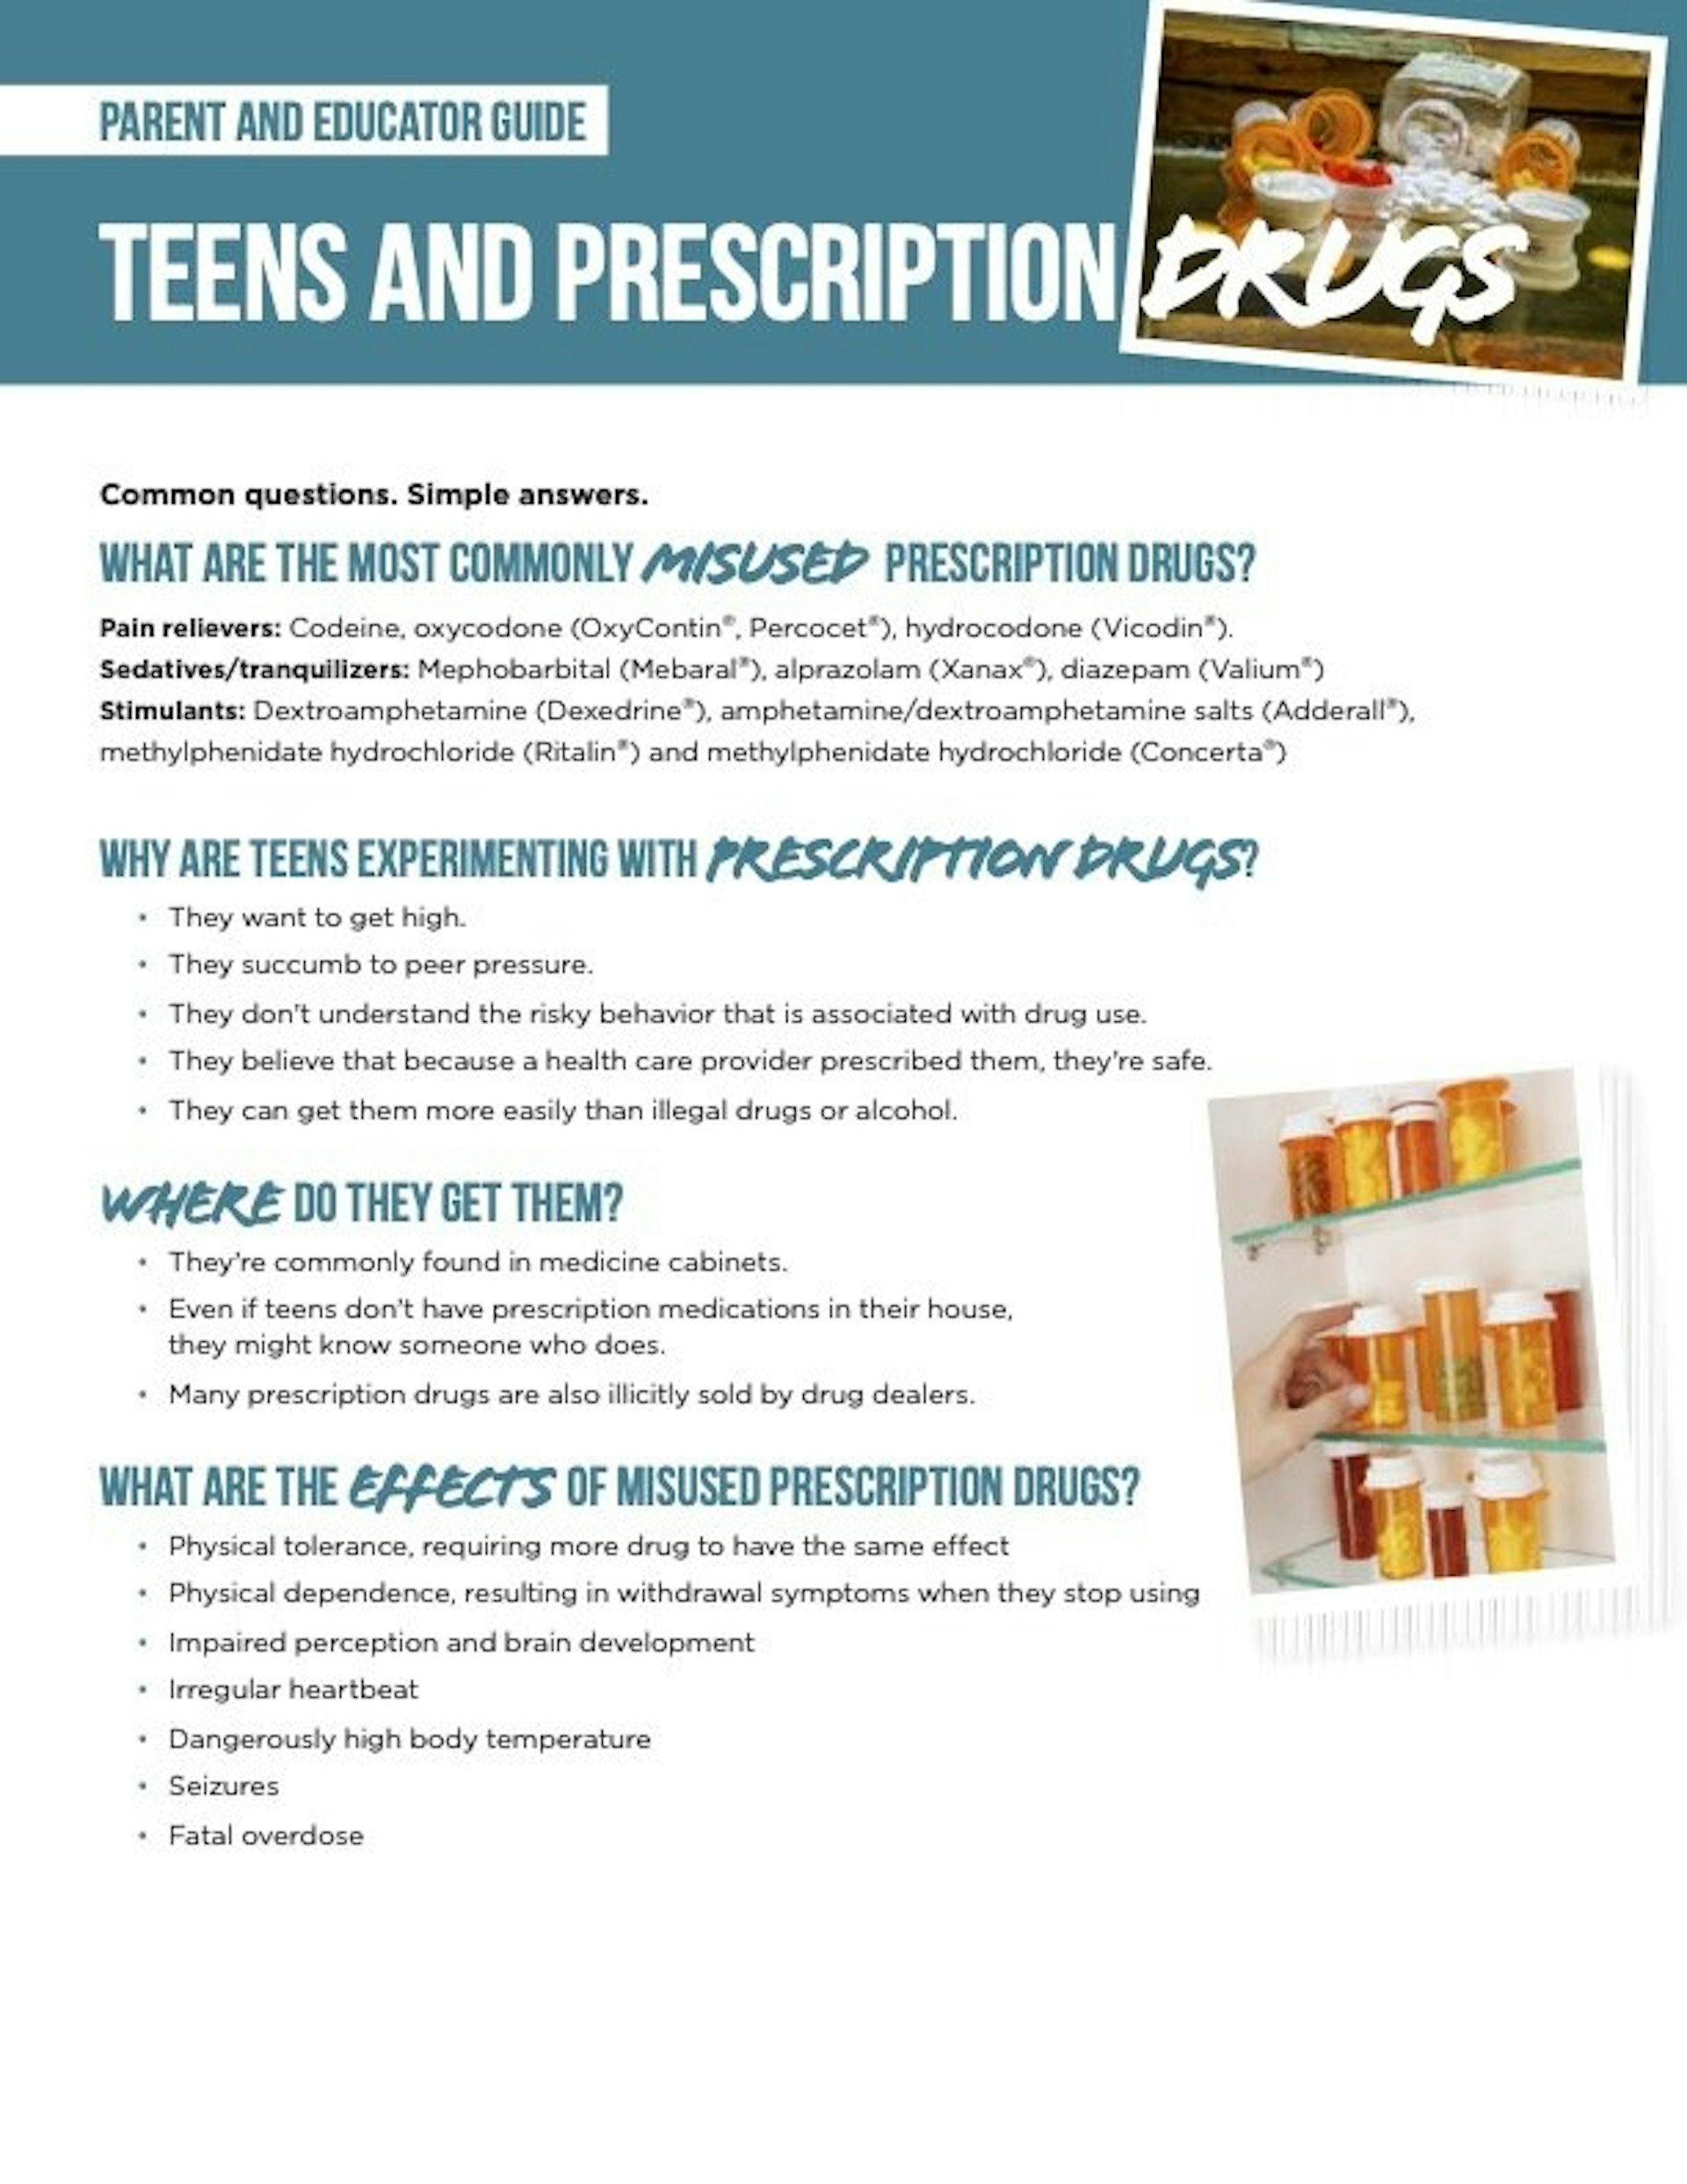 Teens and prescription drugs